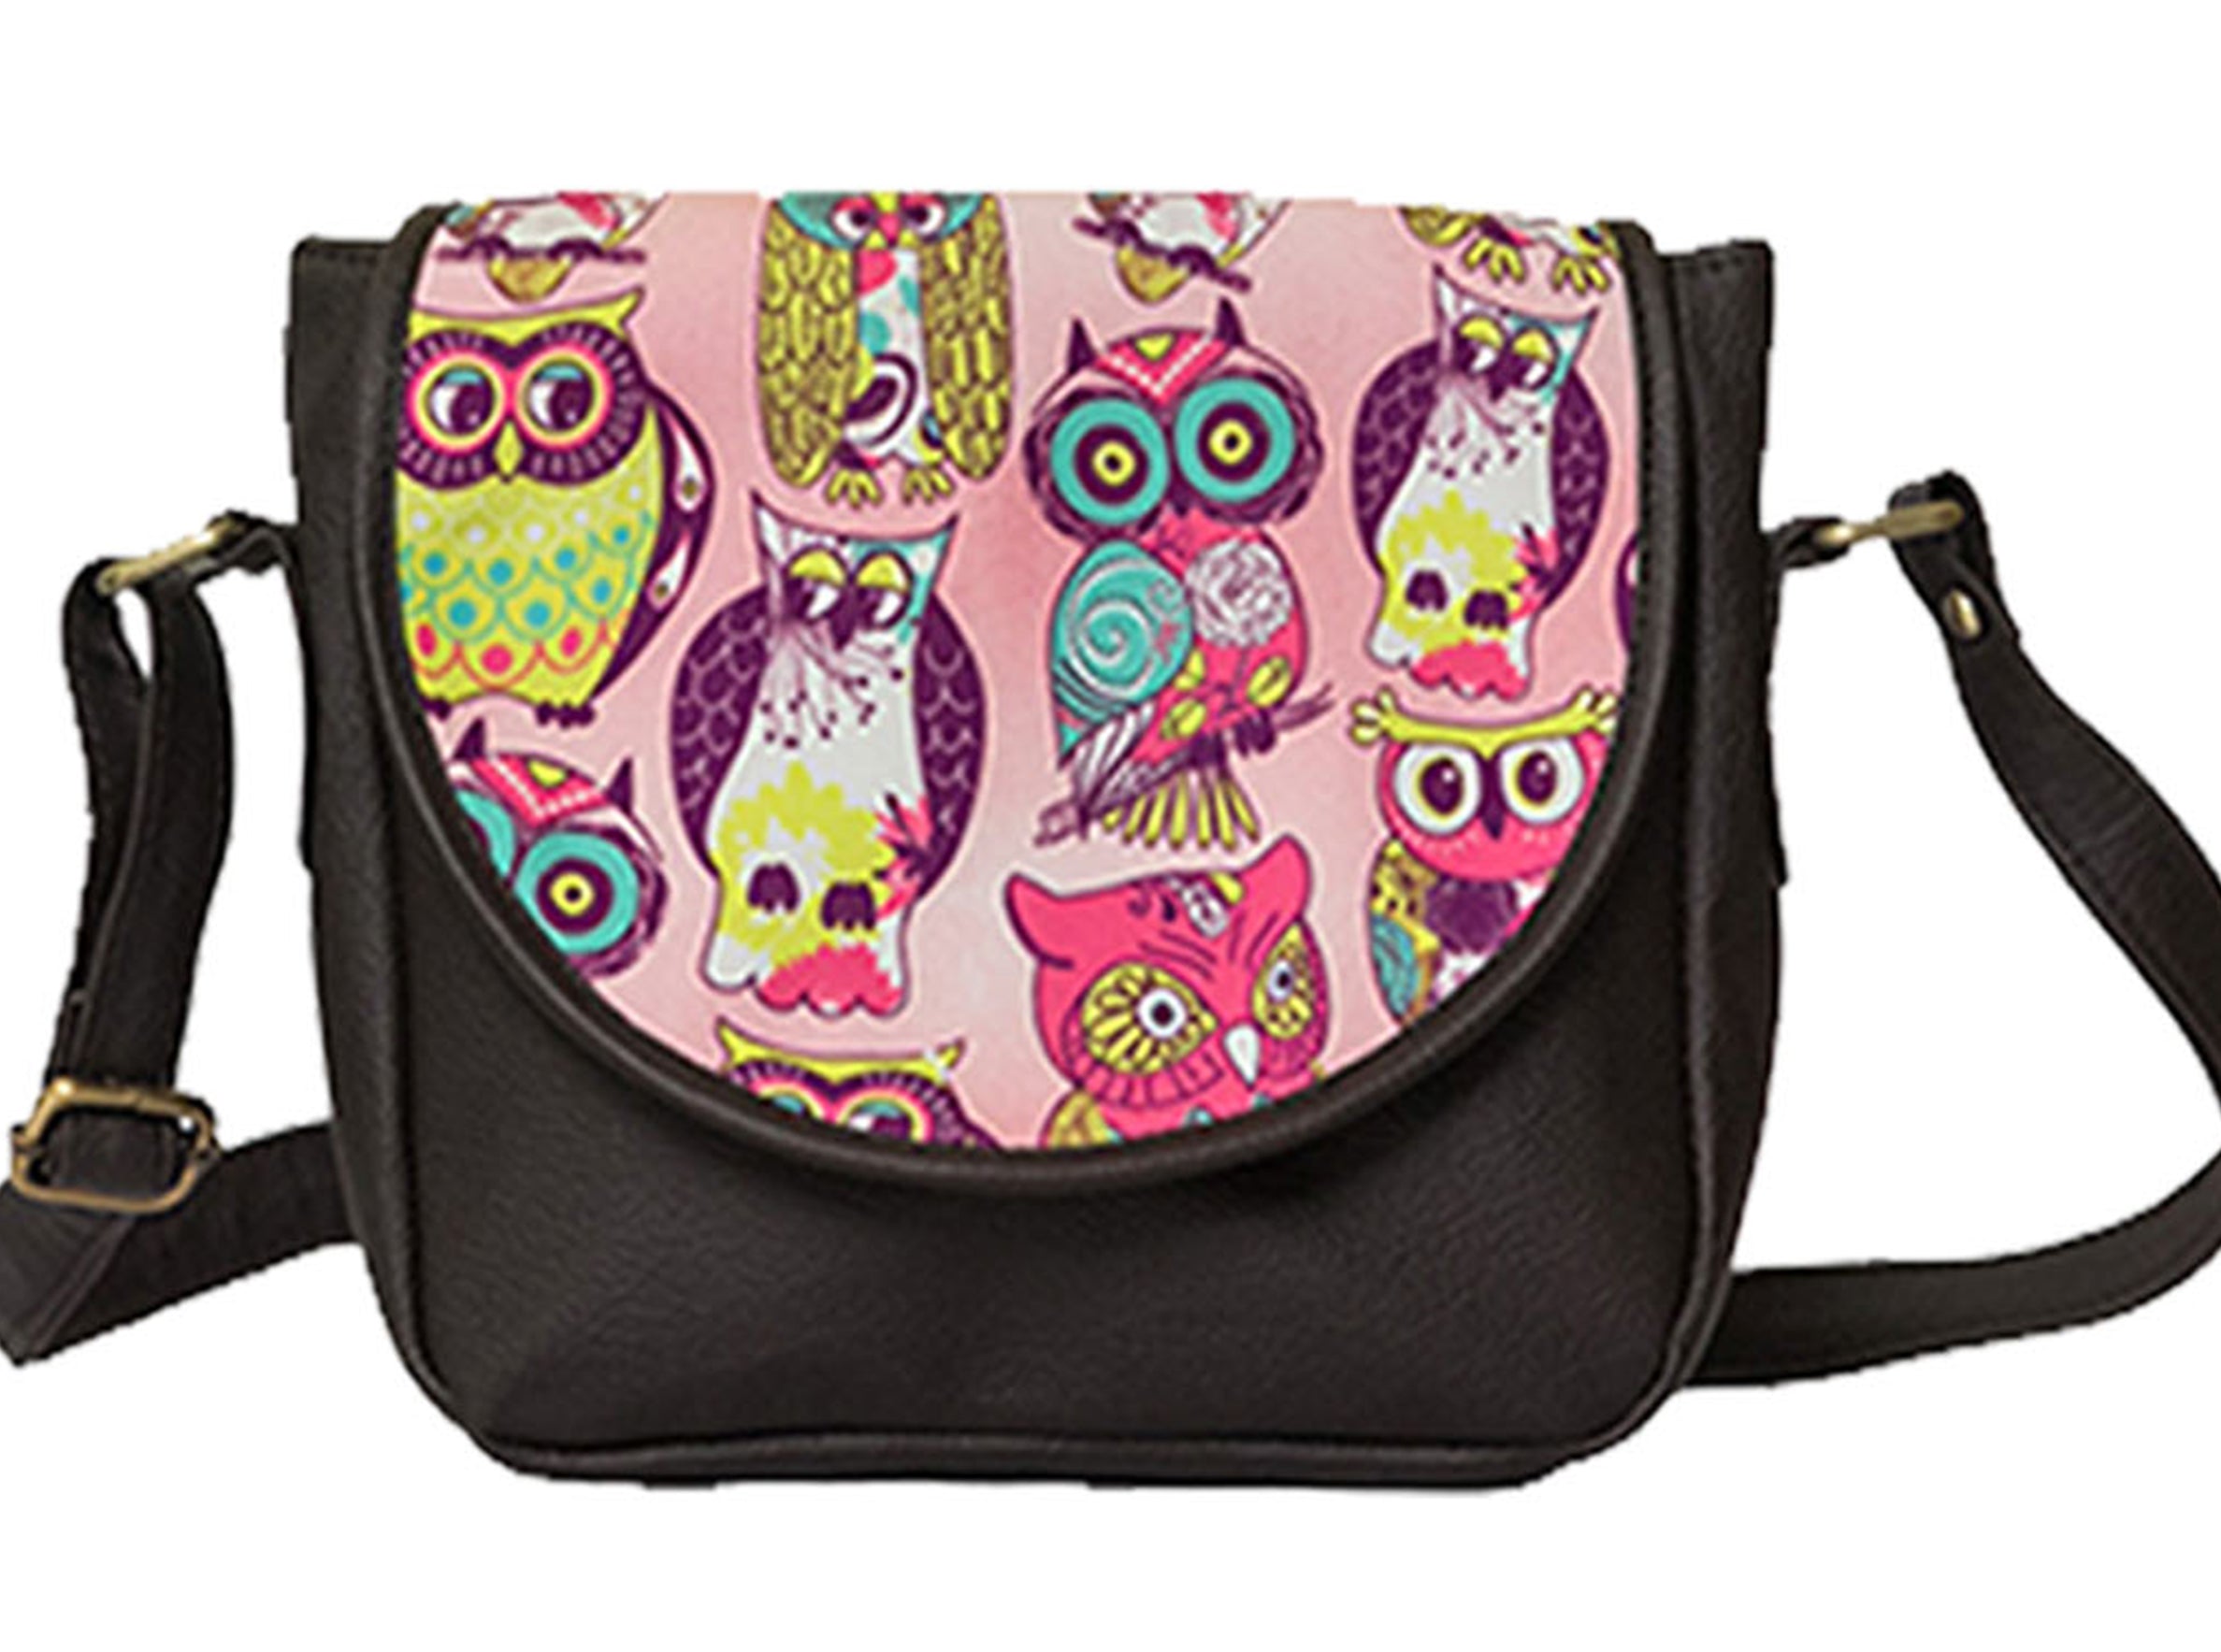 2 x bags, Owl print,New York print, | eBay